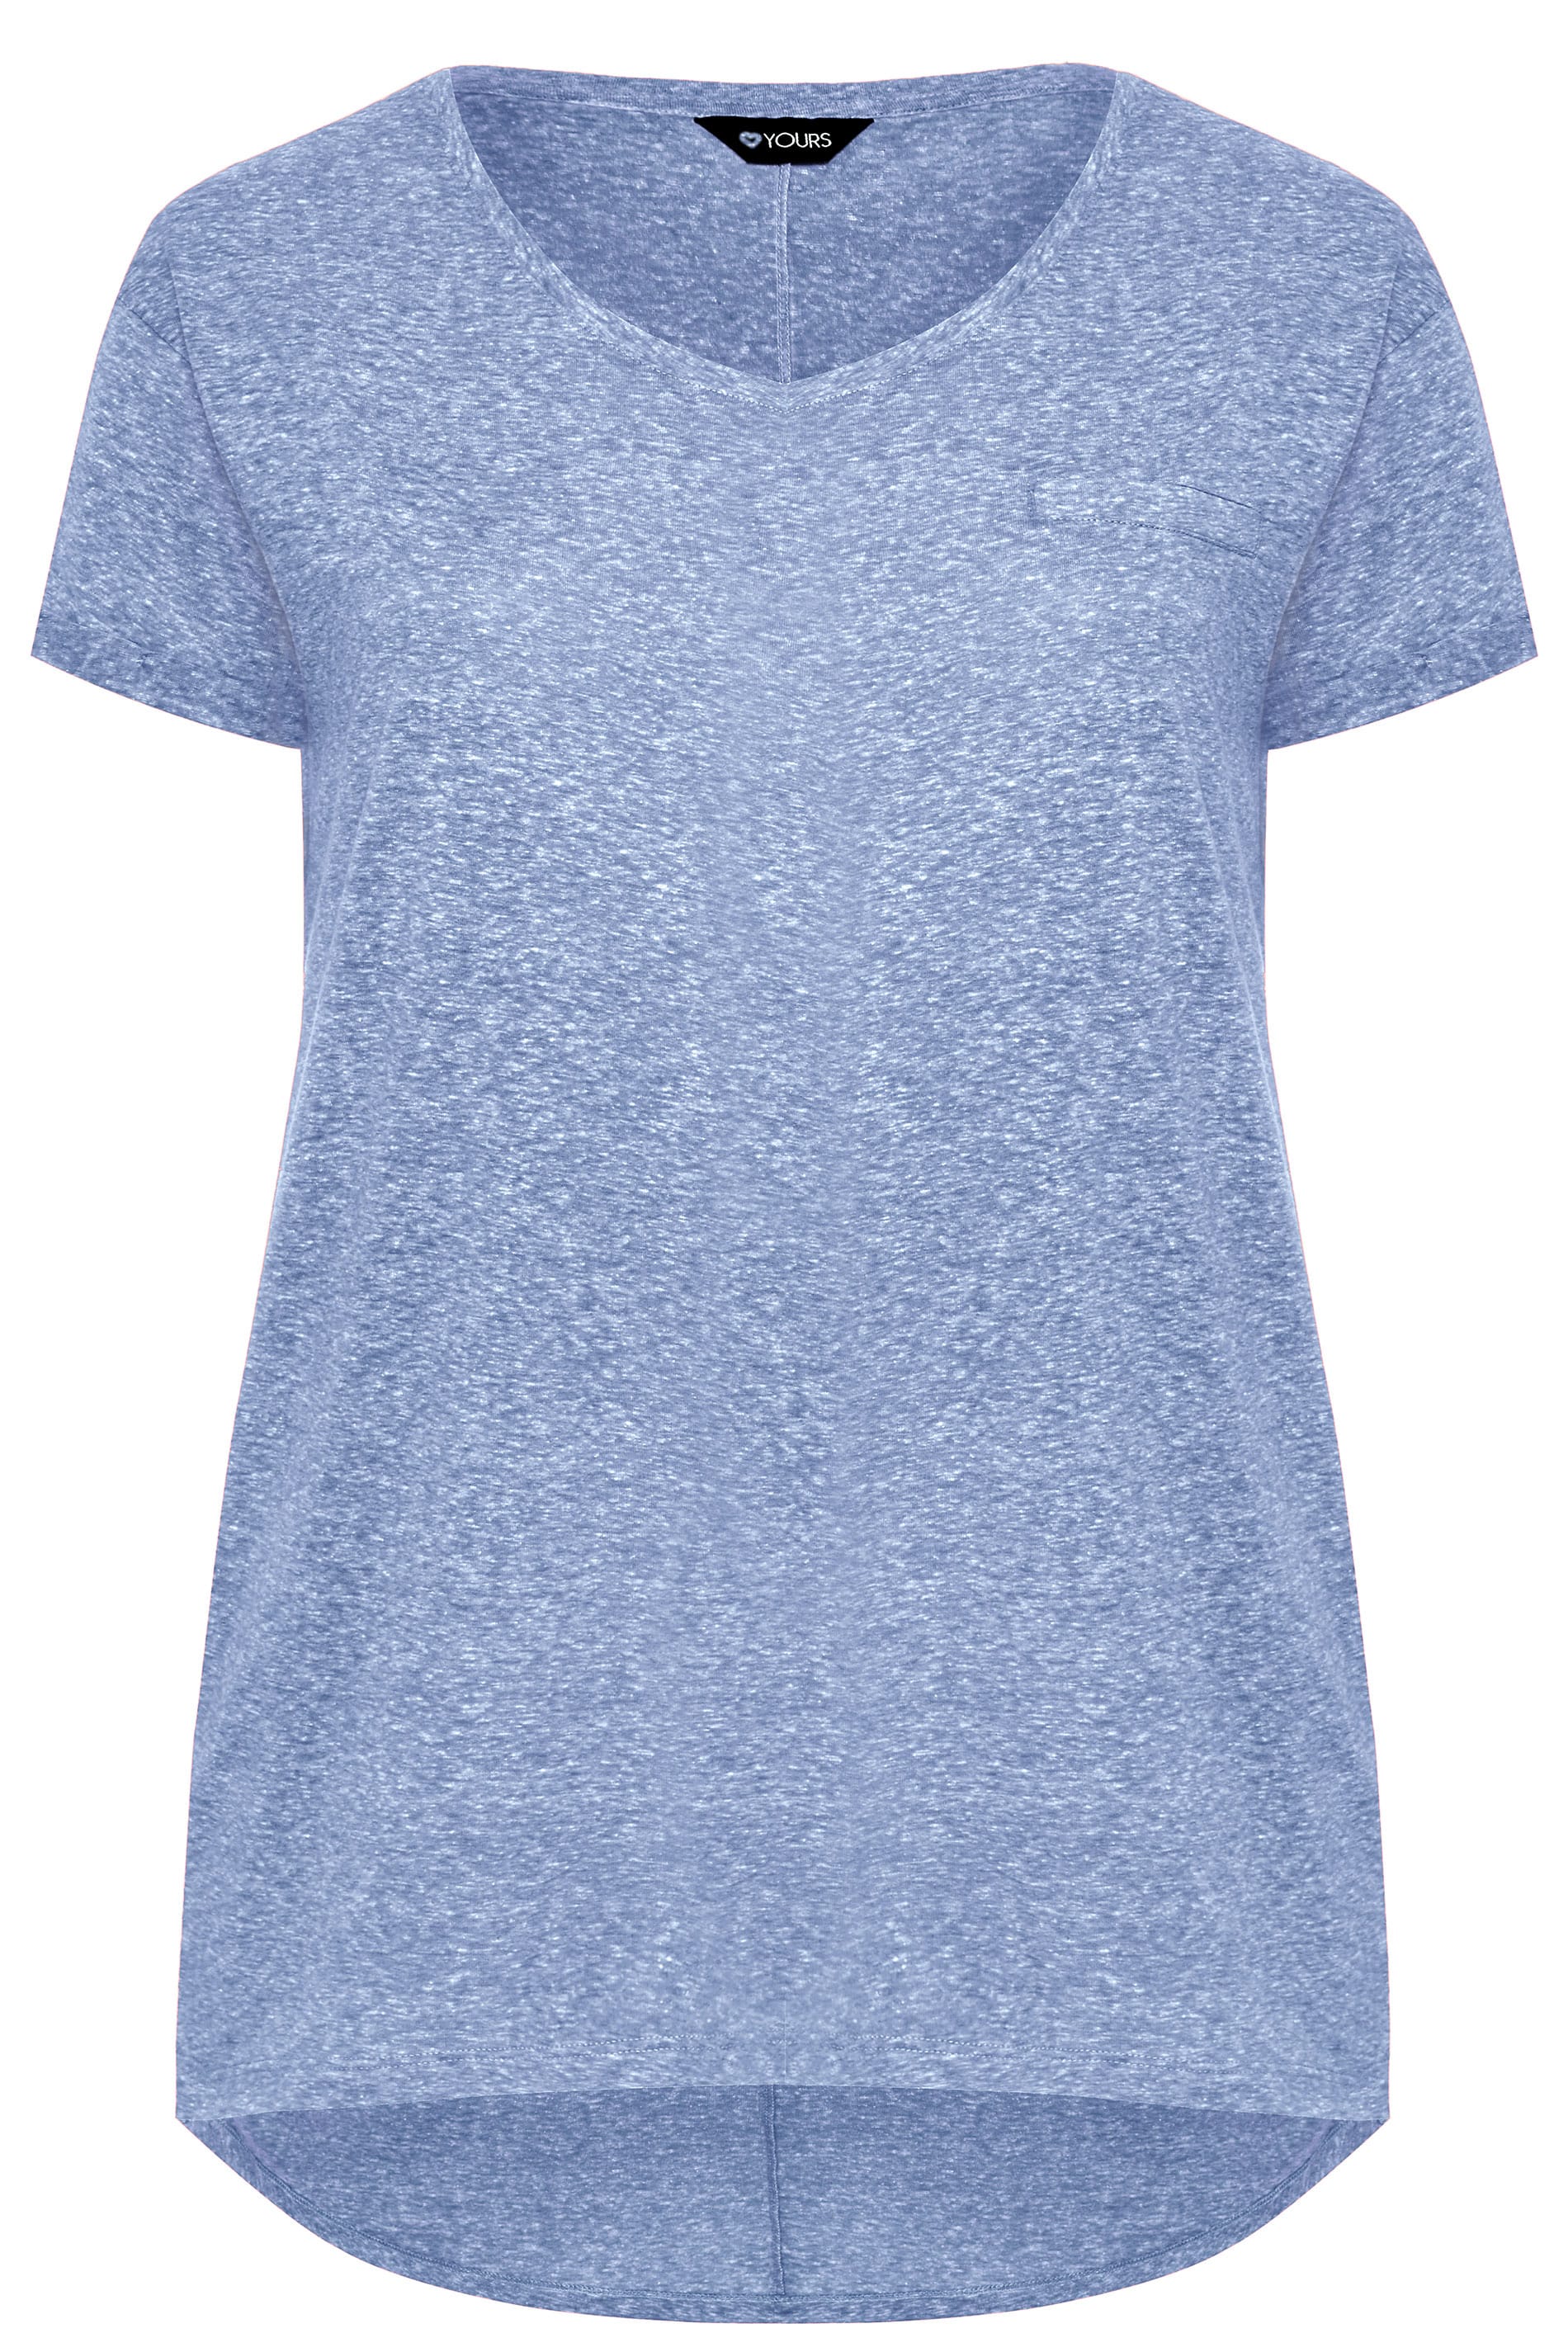 Light Blue Marl Pocket T-Shirt | Yours Clothing